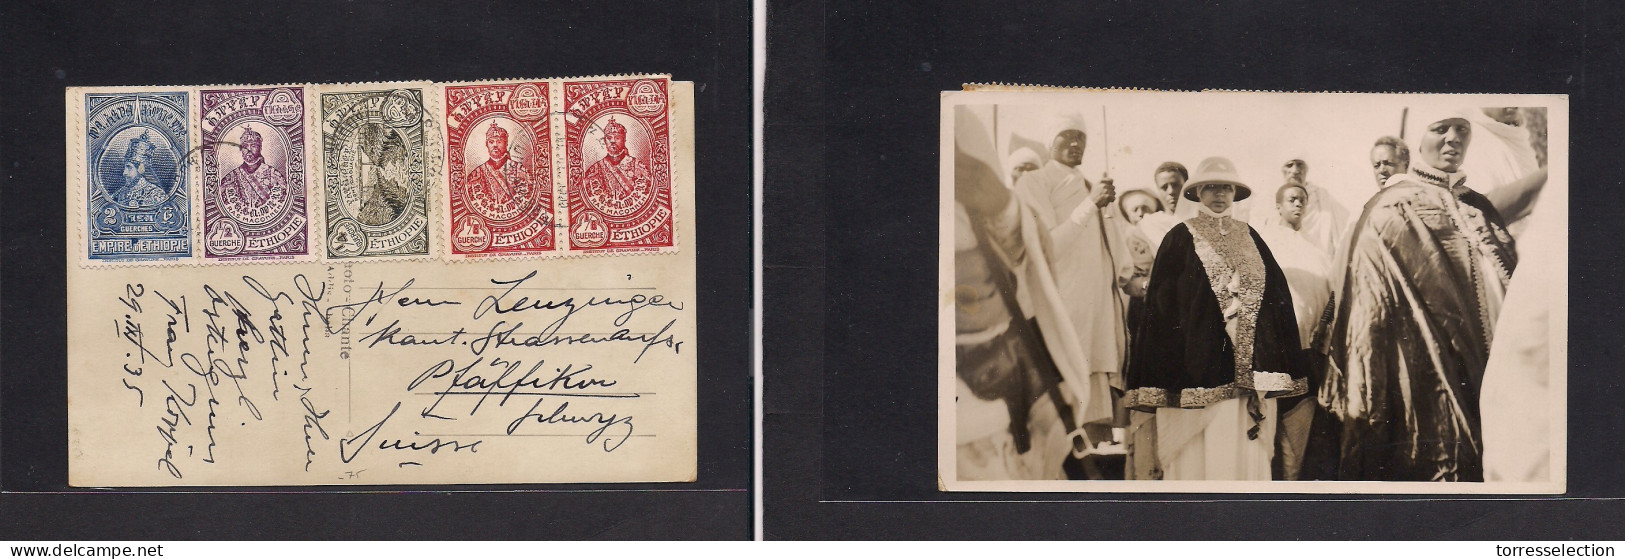 ETHIOPIA. 1935 (29 March) Addis Abeba - Switzerland, Pfaffikon. Multifkd Emperor Wife Photo Card. Lovely Usage At 3que R - Ethiopie